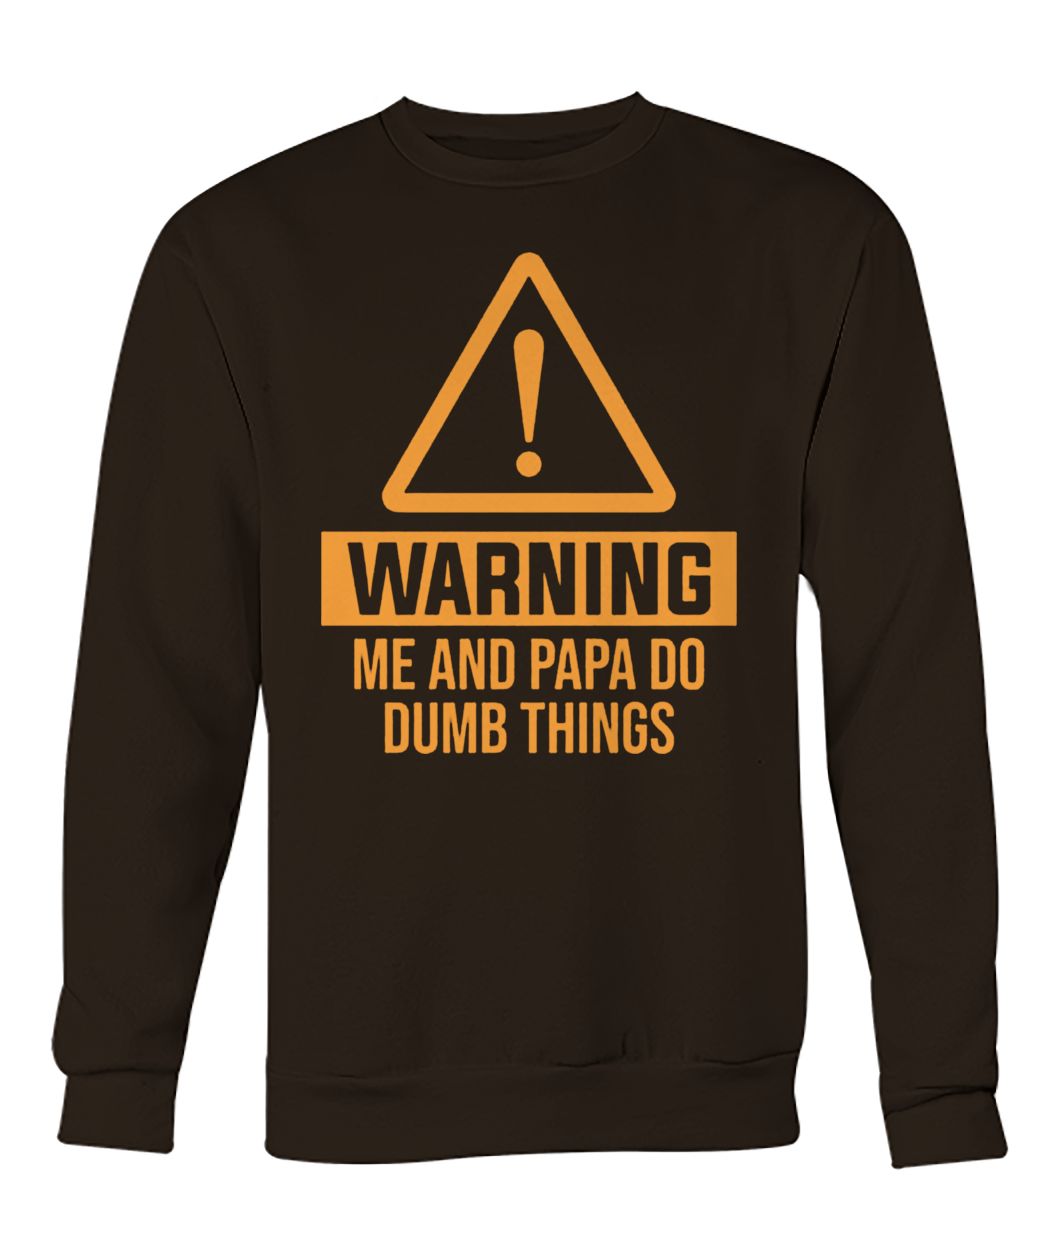 Warning me and papa do dumb things crew neck sweatshirt